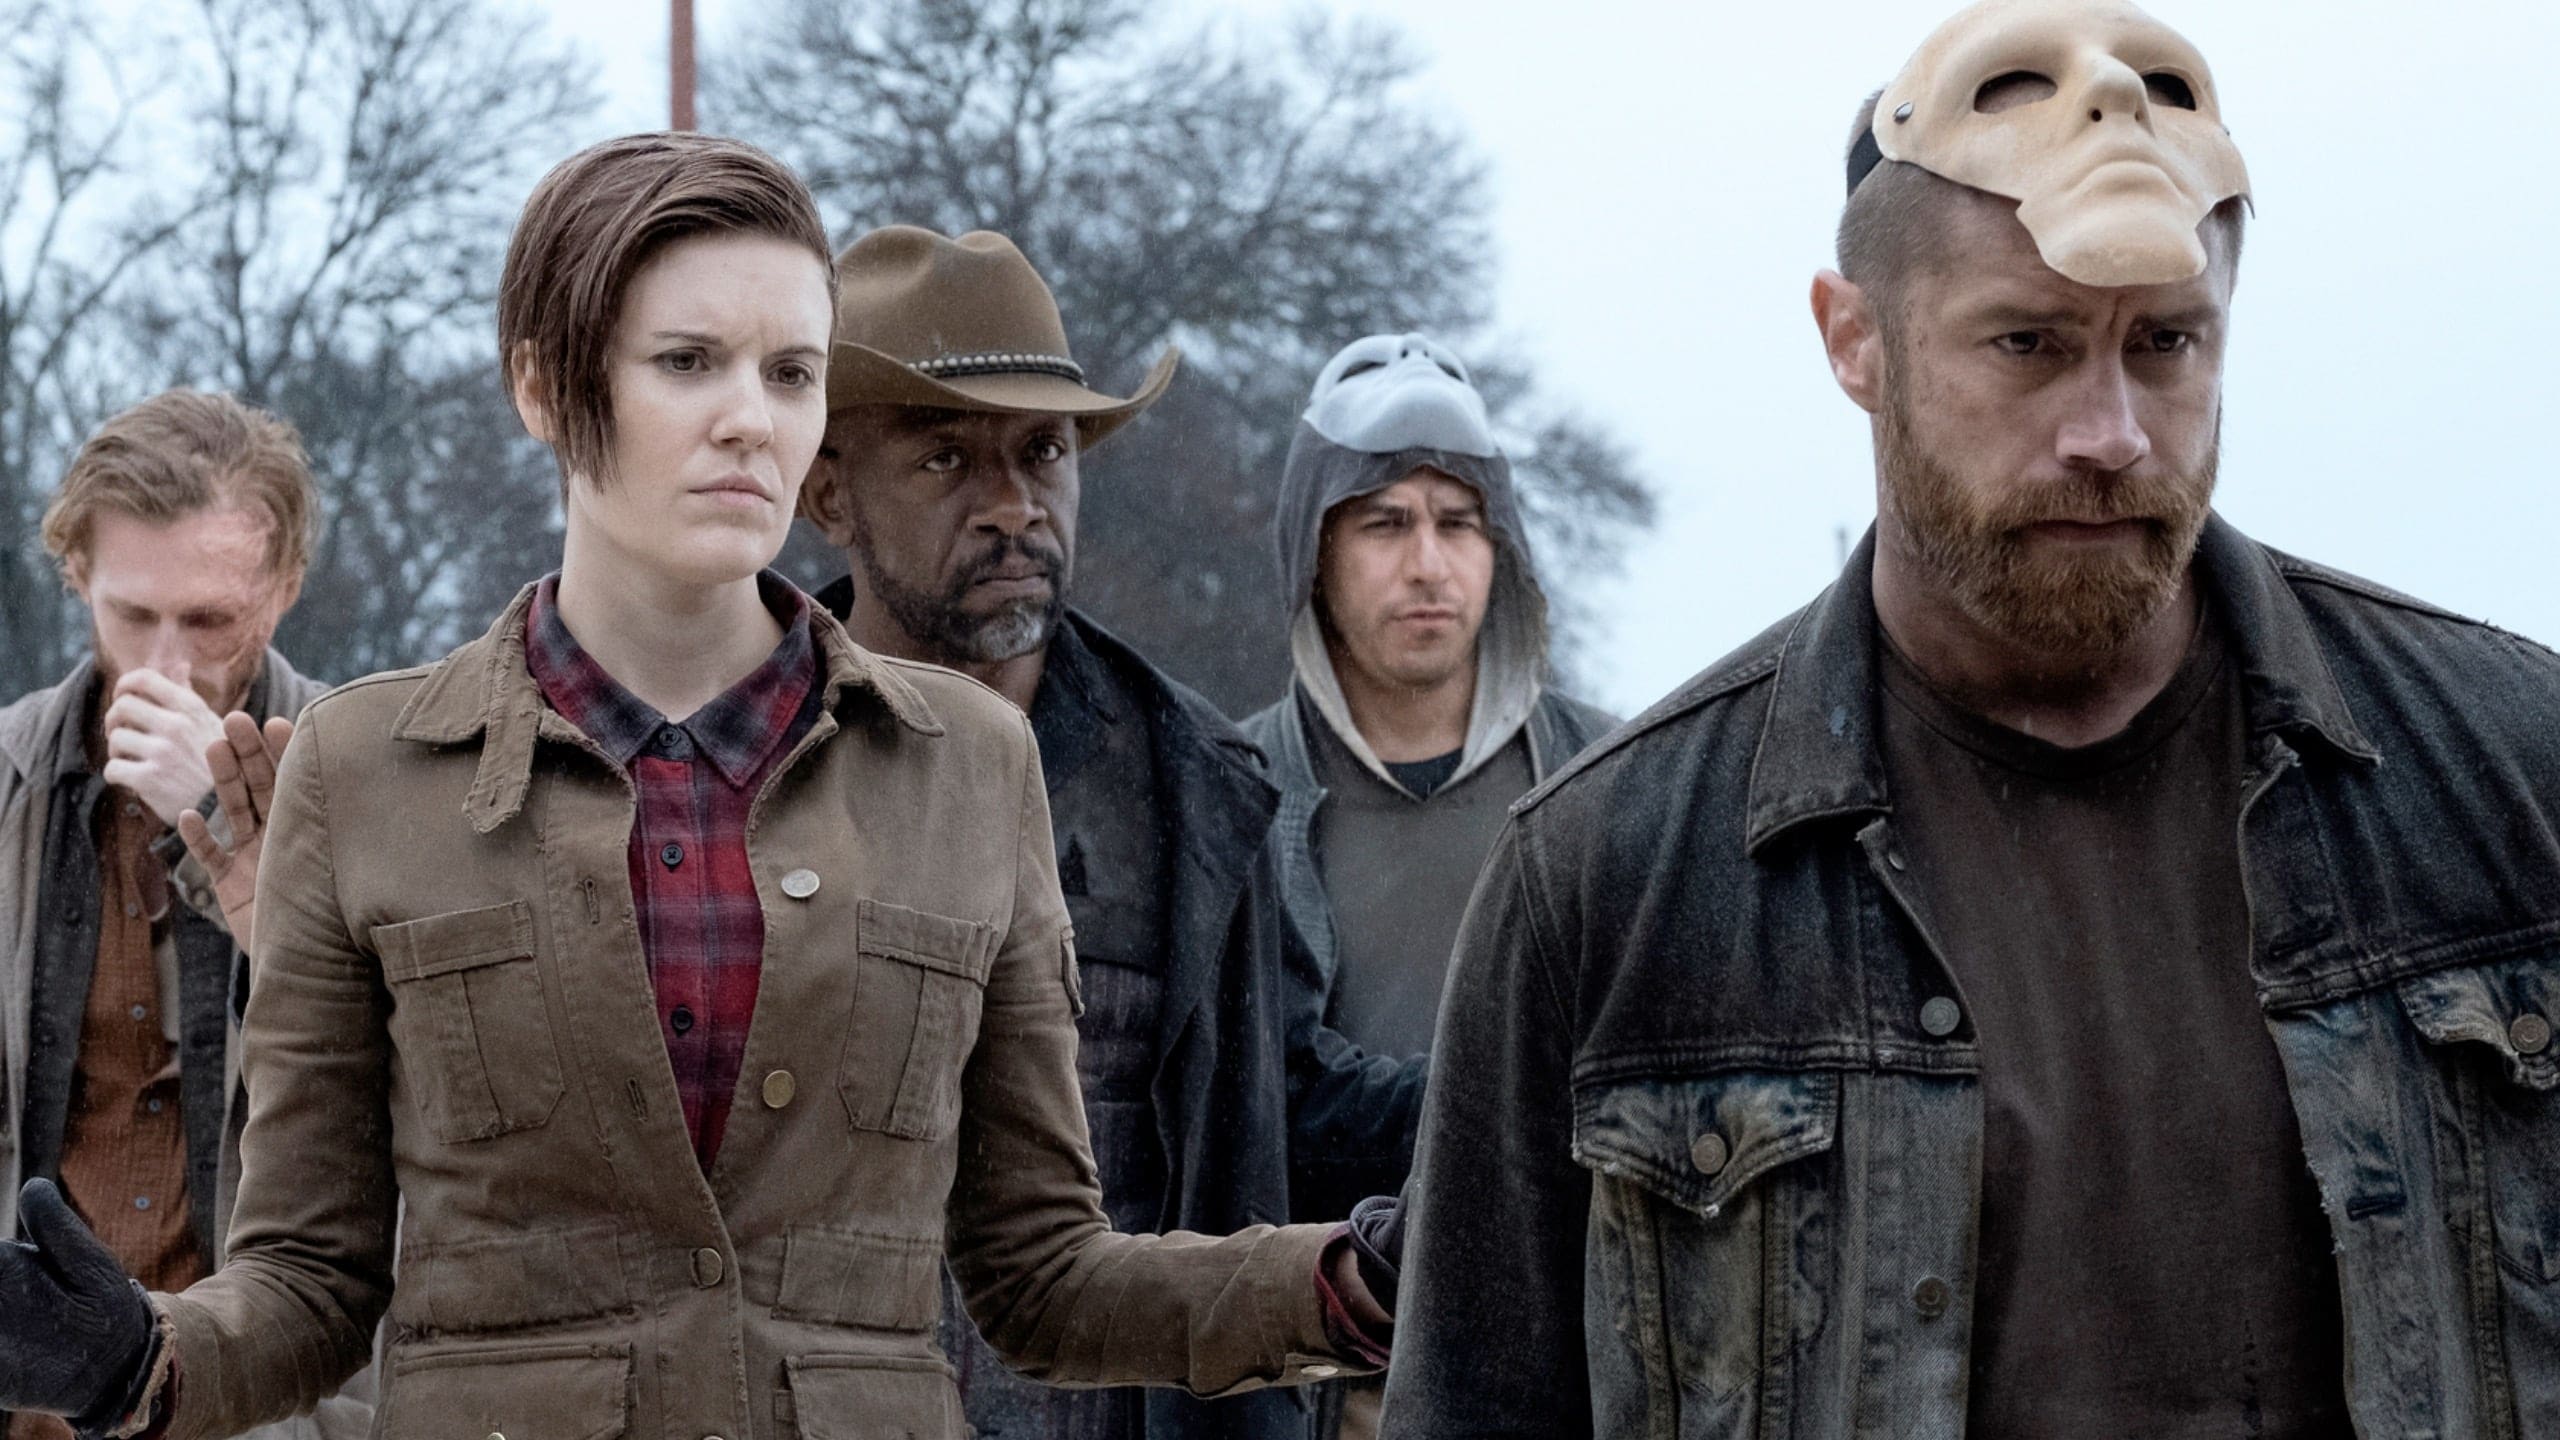 Is Fear the Walking Dead on Netflix, Hulu, or Prime? Where to Watch it